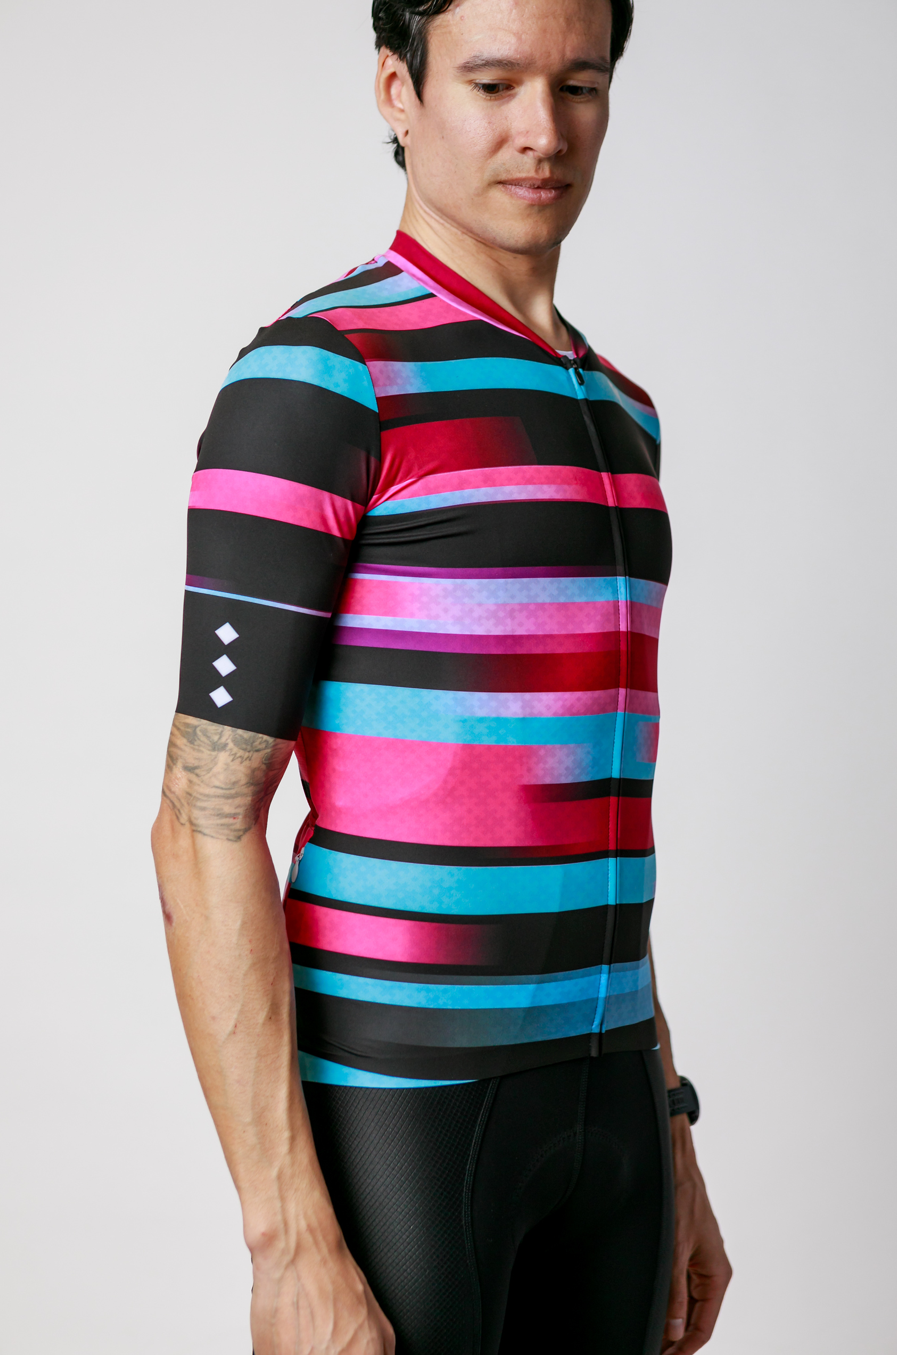 Men's ProSpec Rouleur HZ Jersey | EPYC Supporters | Sportivo stripes in Bright Blue + Hot Pink + Obsidian Black